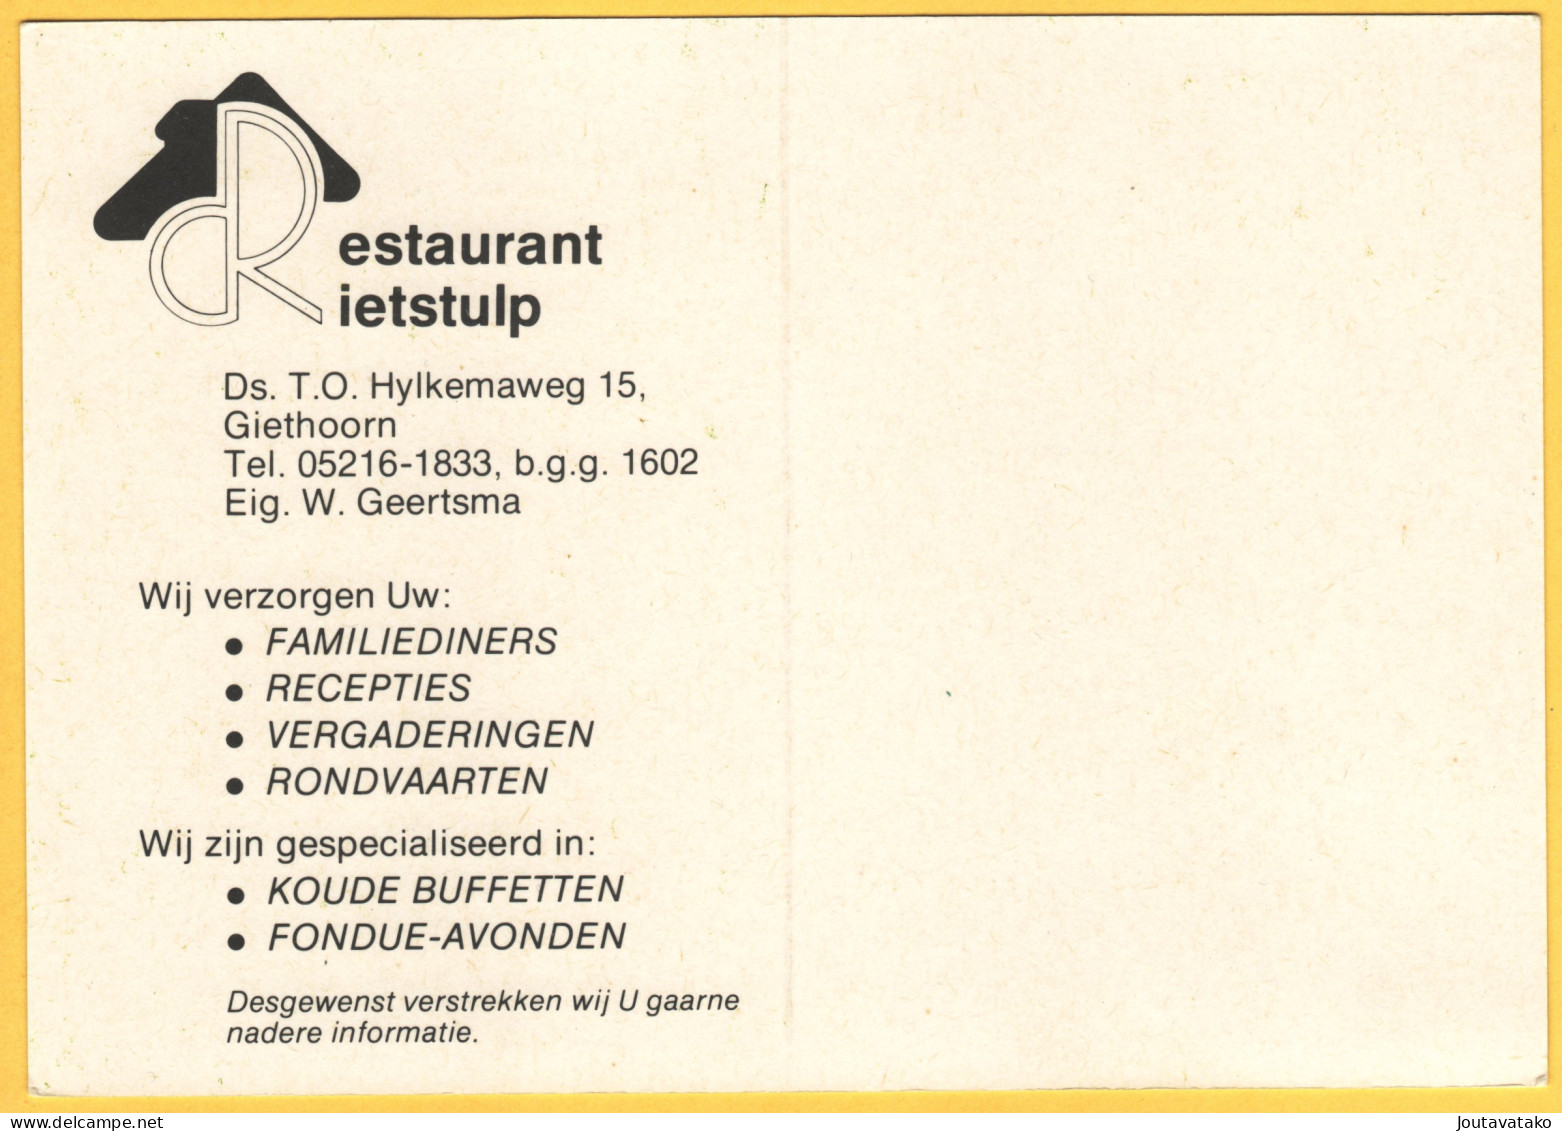 Restaurant Rietstulp - Giethoorn - Holland, Netherlands - Giethoorn